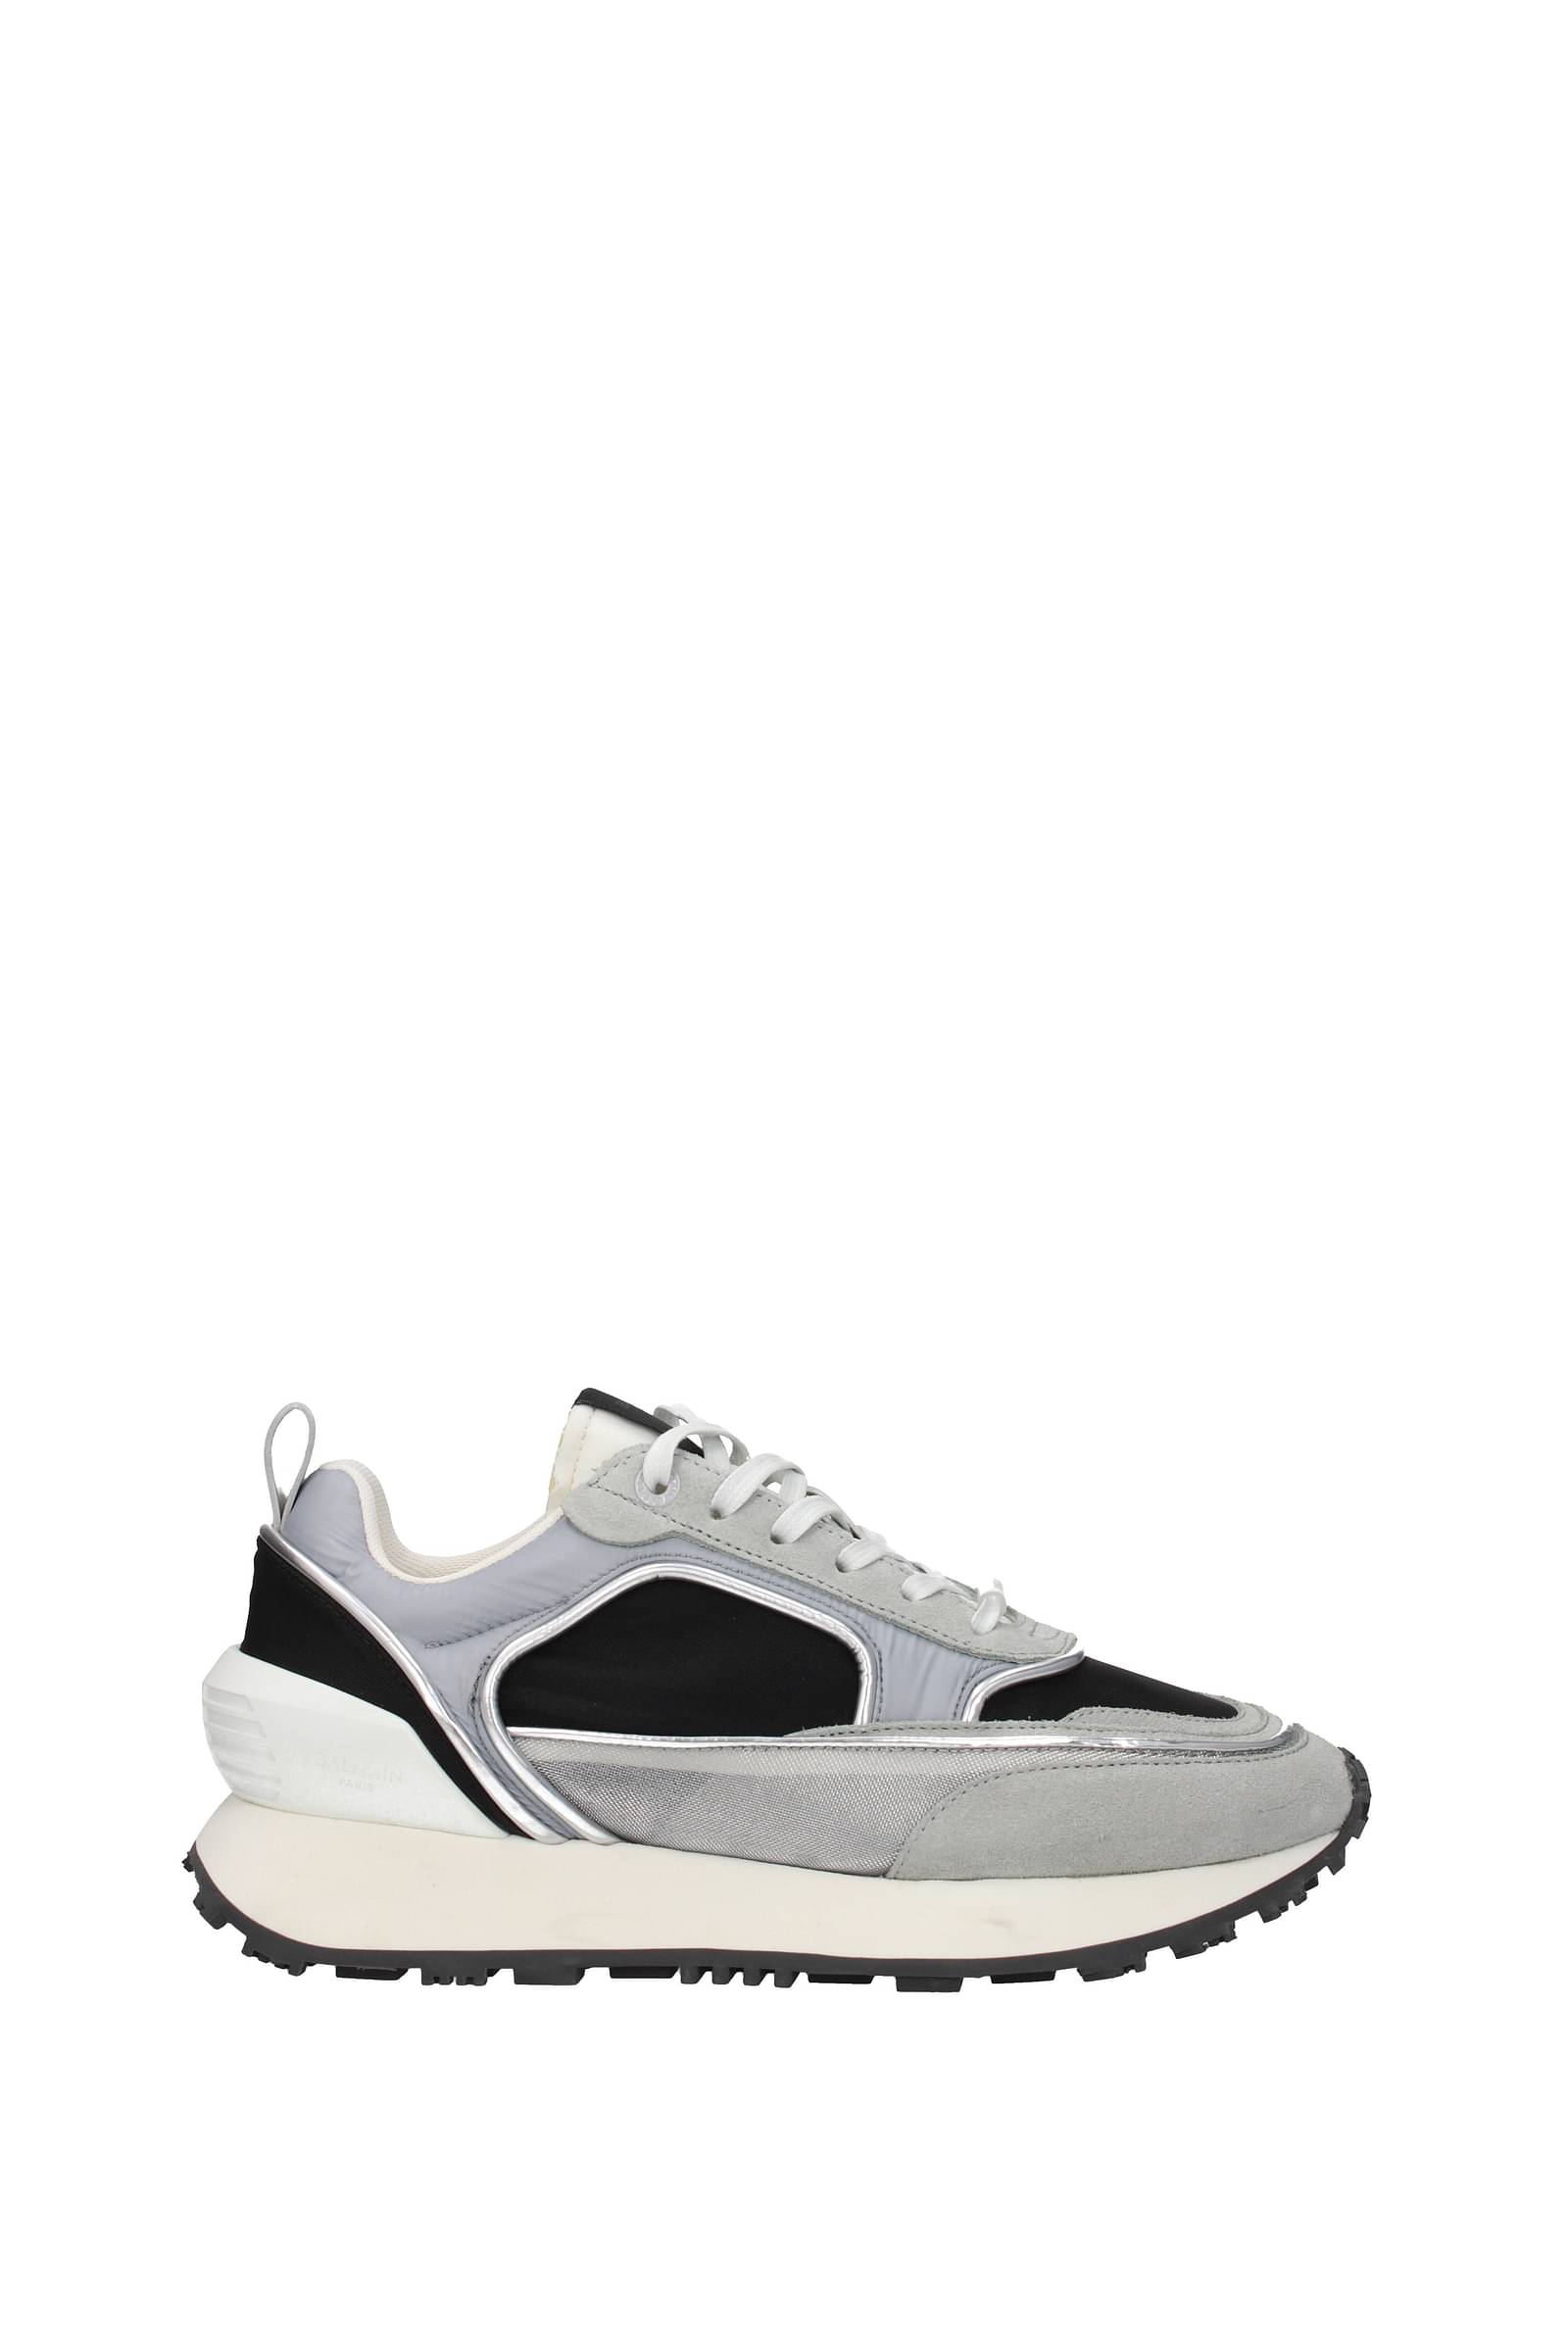 Mens Shoes Balmain, Style code: bm1vj309-knsc-0pa | Men's shoes, Balmain  shoes, Top sneakers